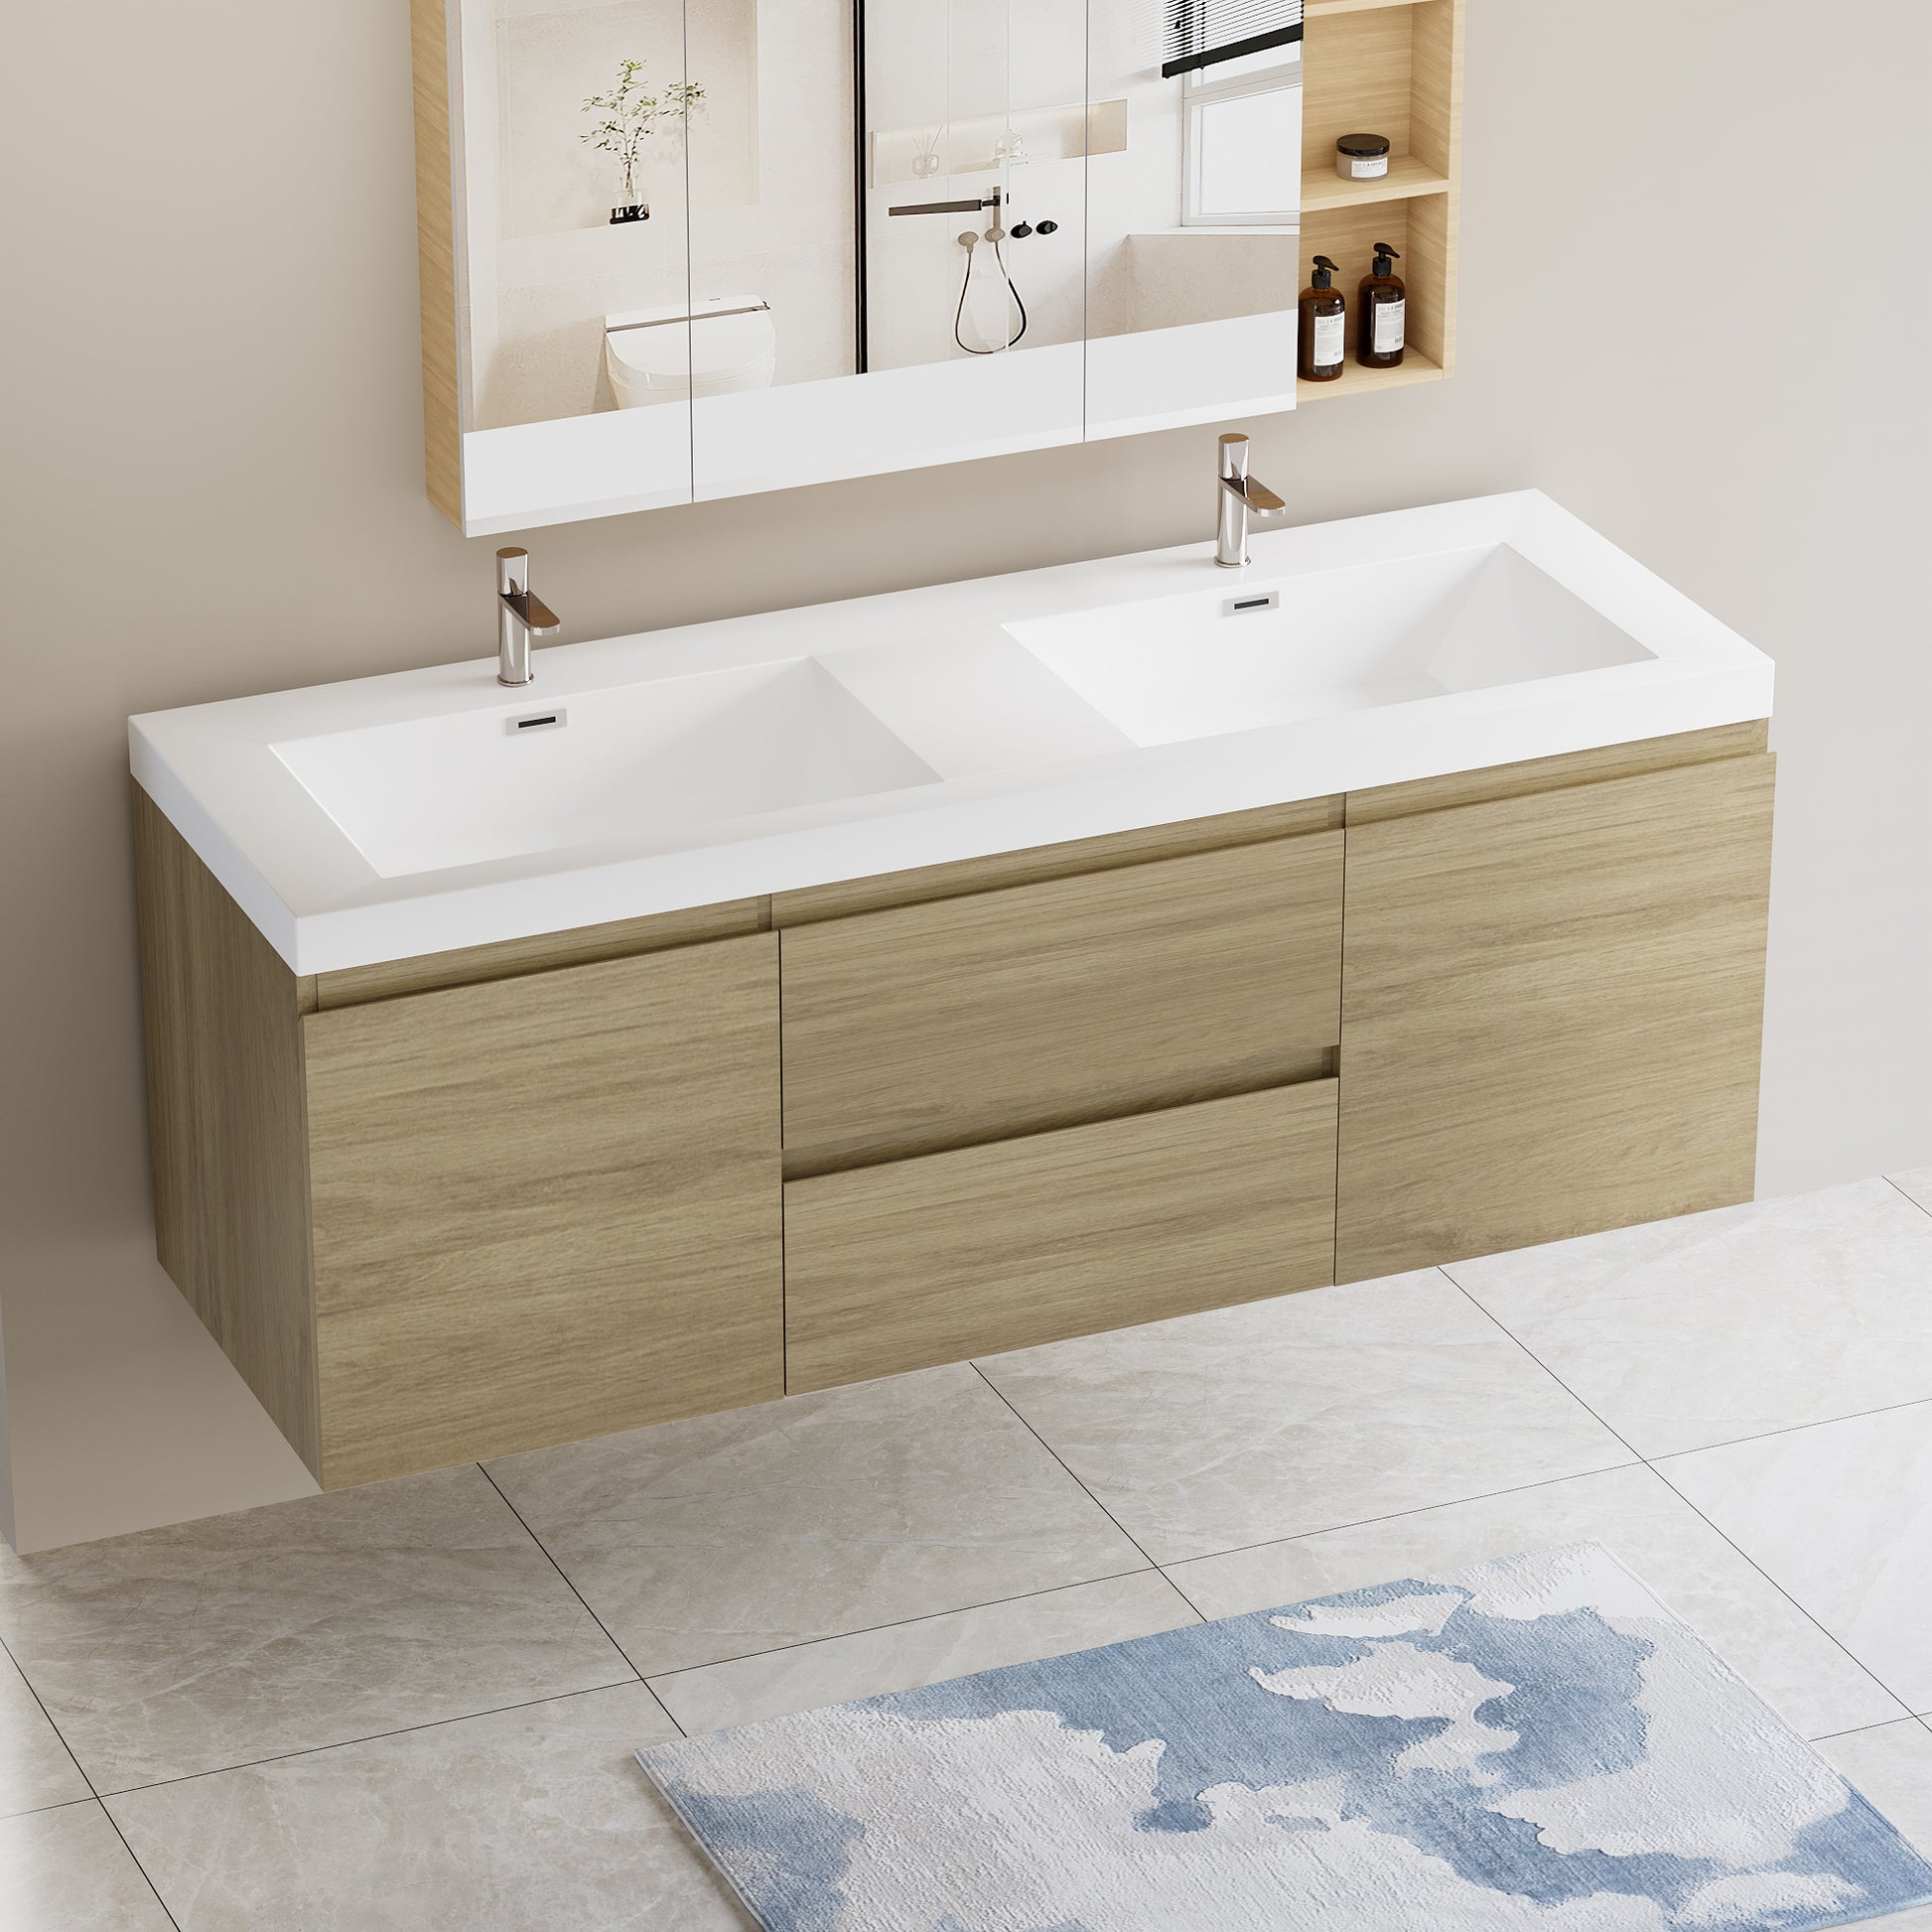 60" Floating Bathroom Vanity with Sink, Modern Wall 2-oak-2-bathroom-wall mounted-melamine